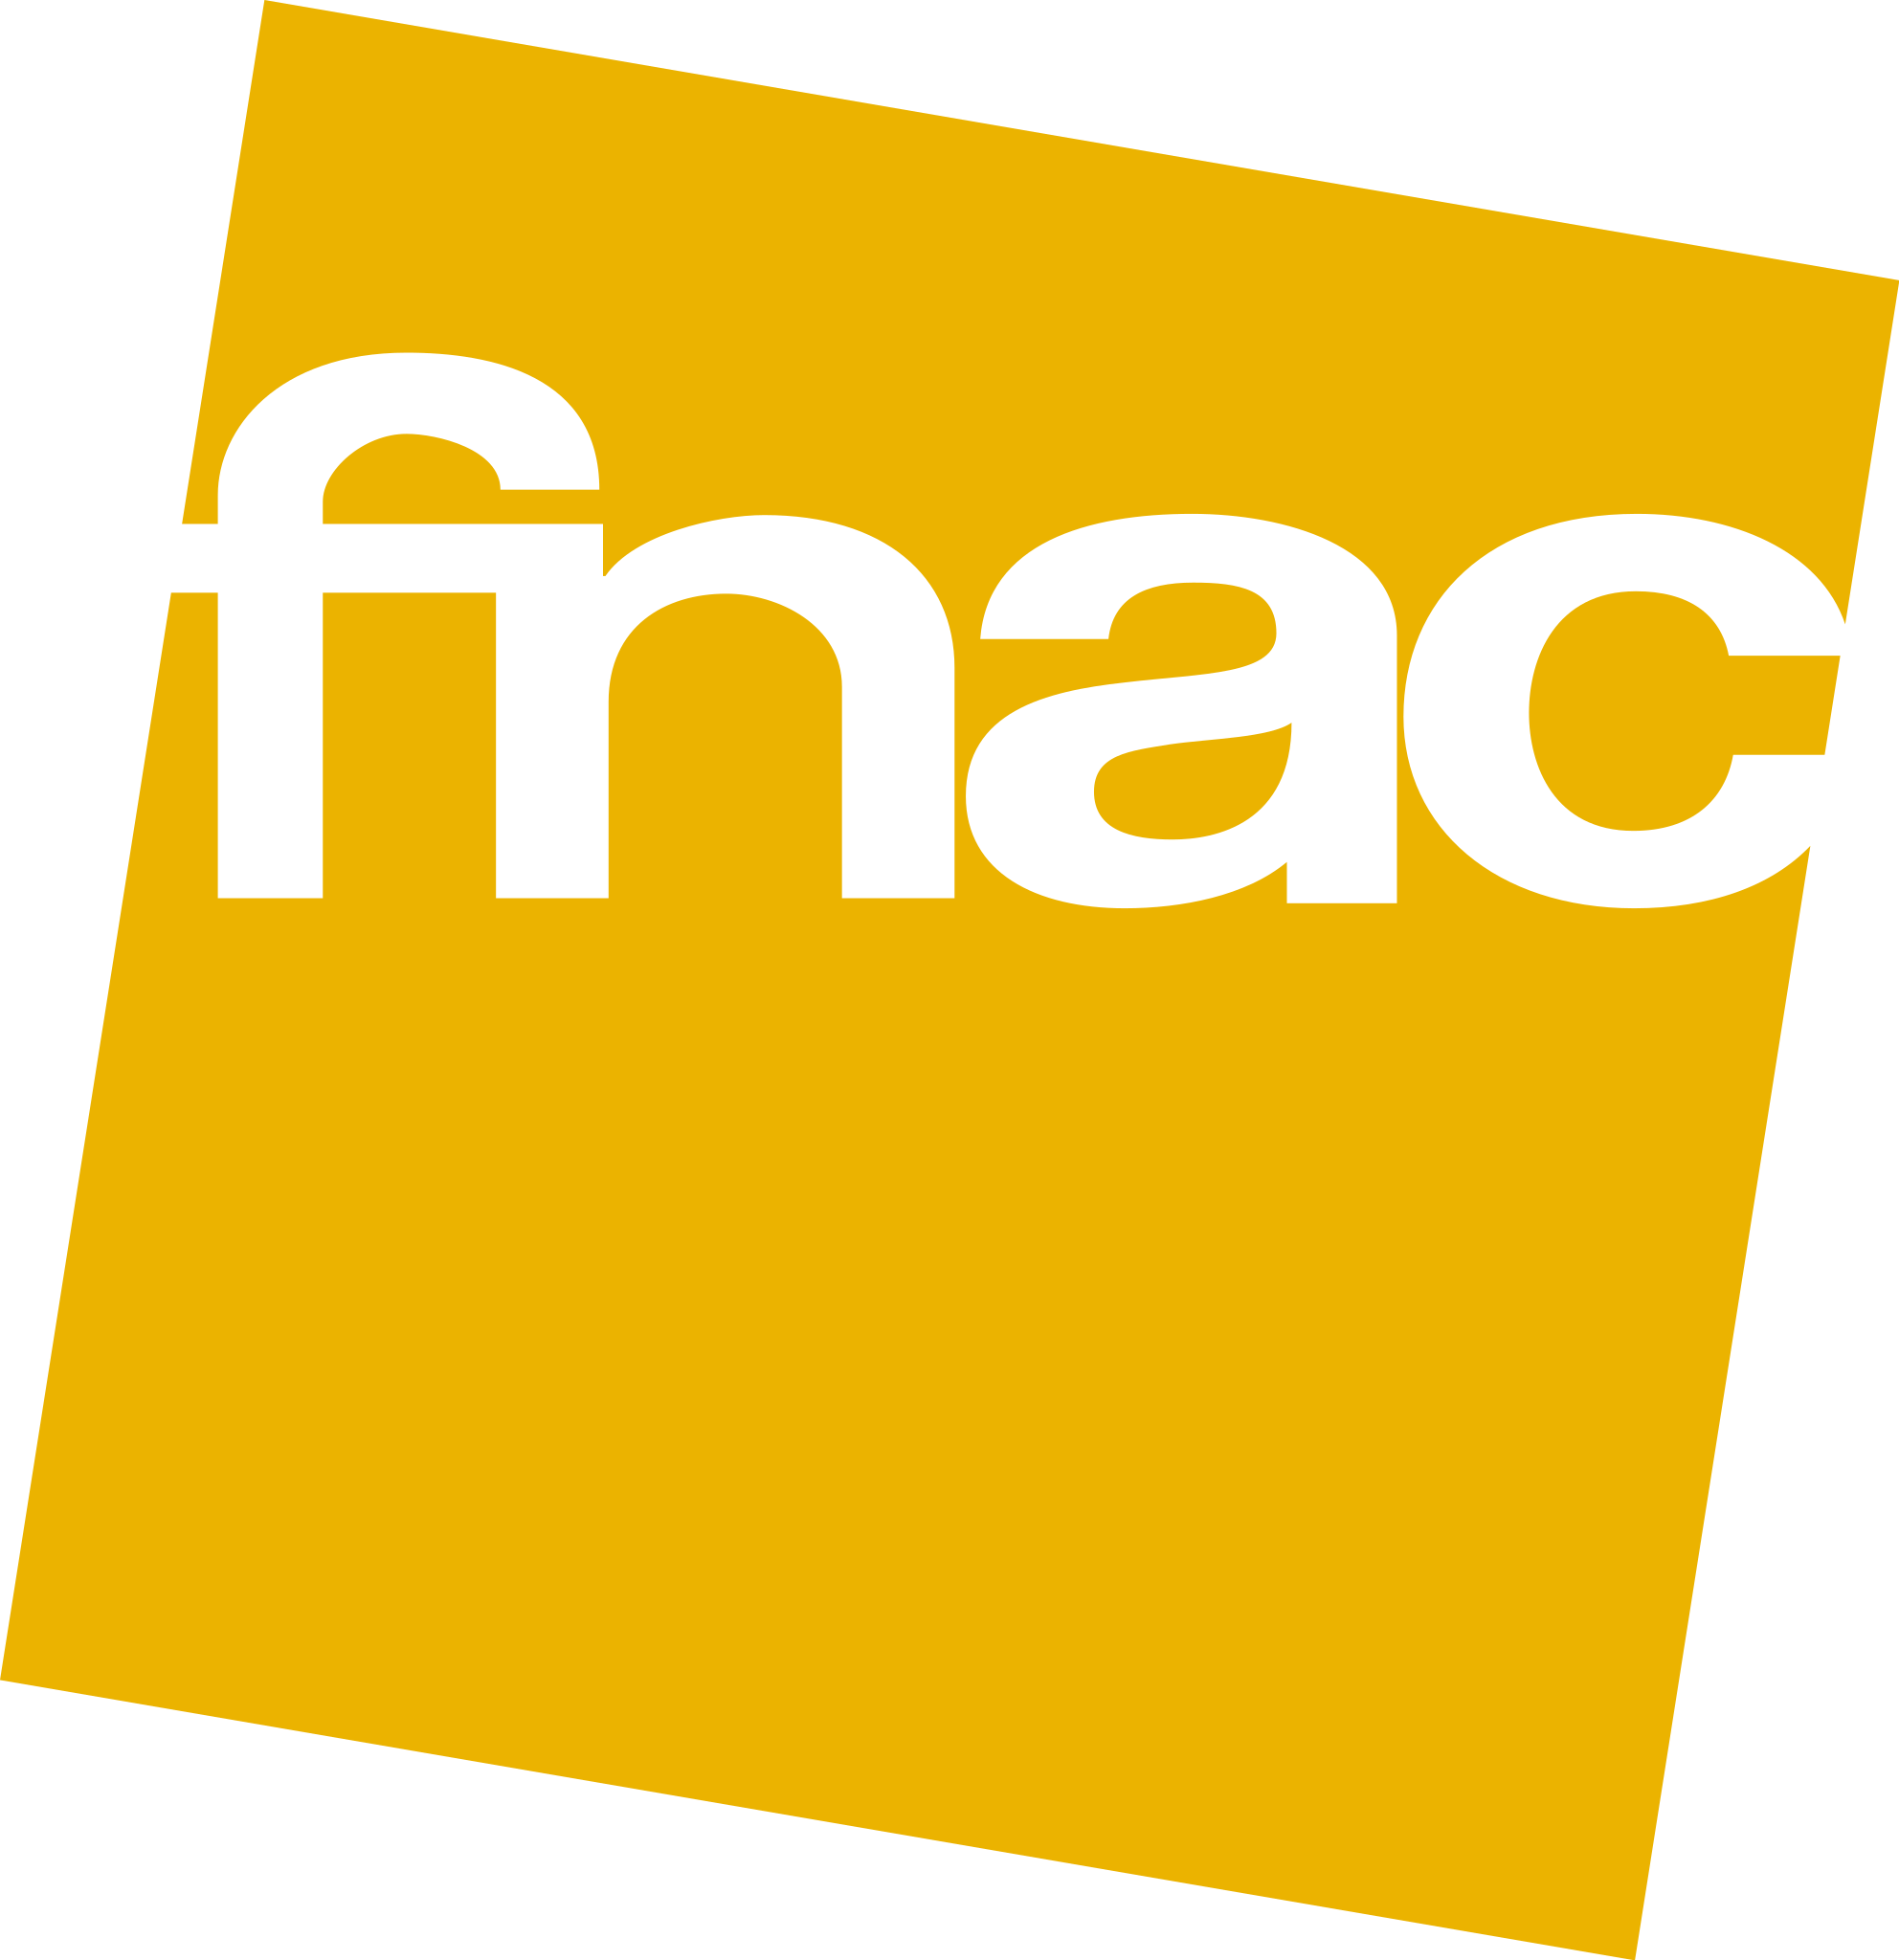 Logo de Fnac